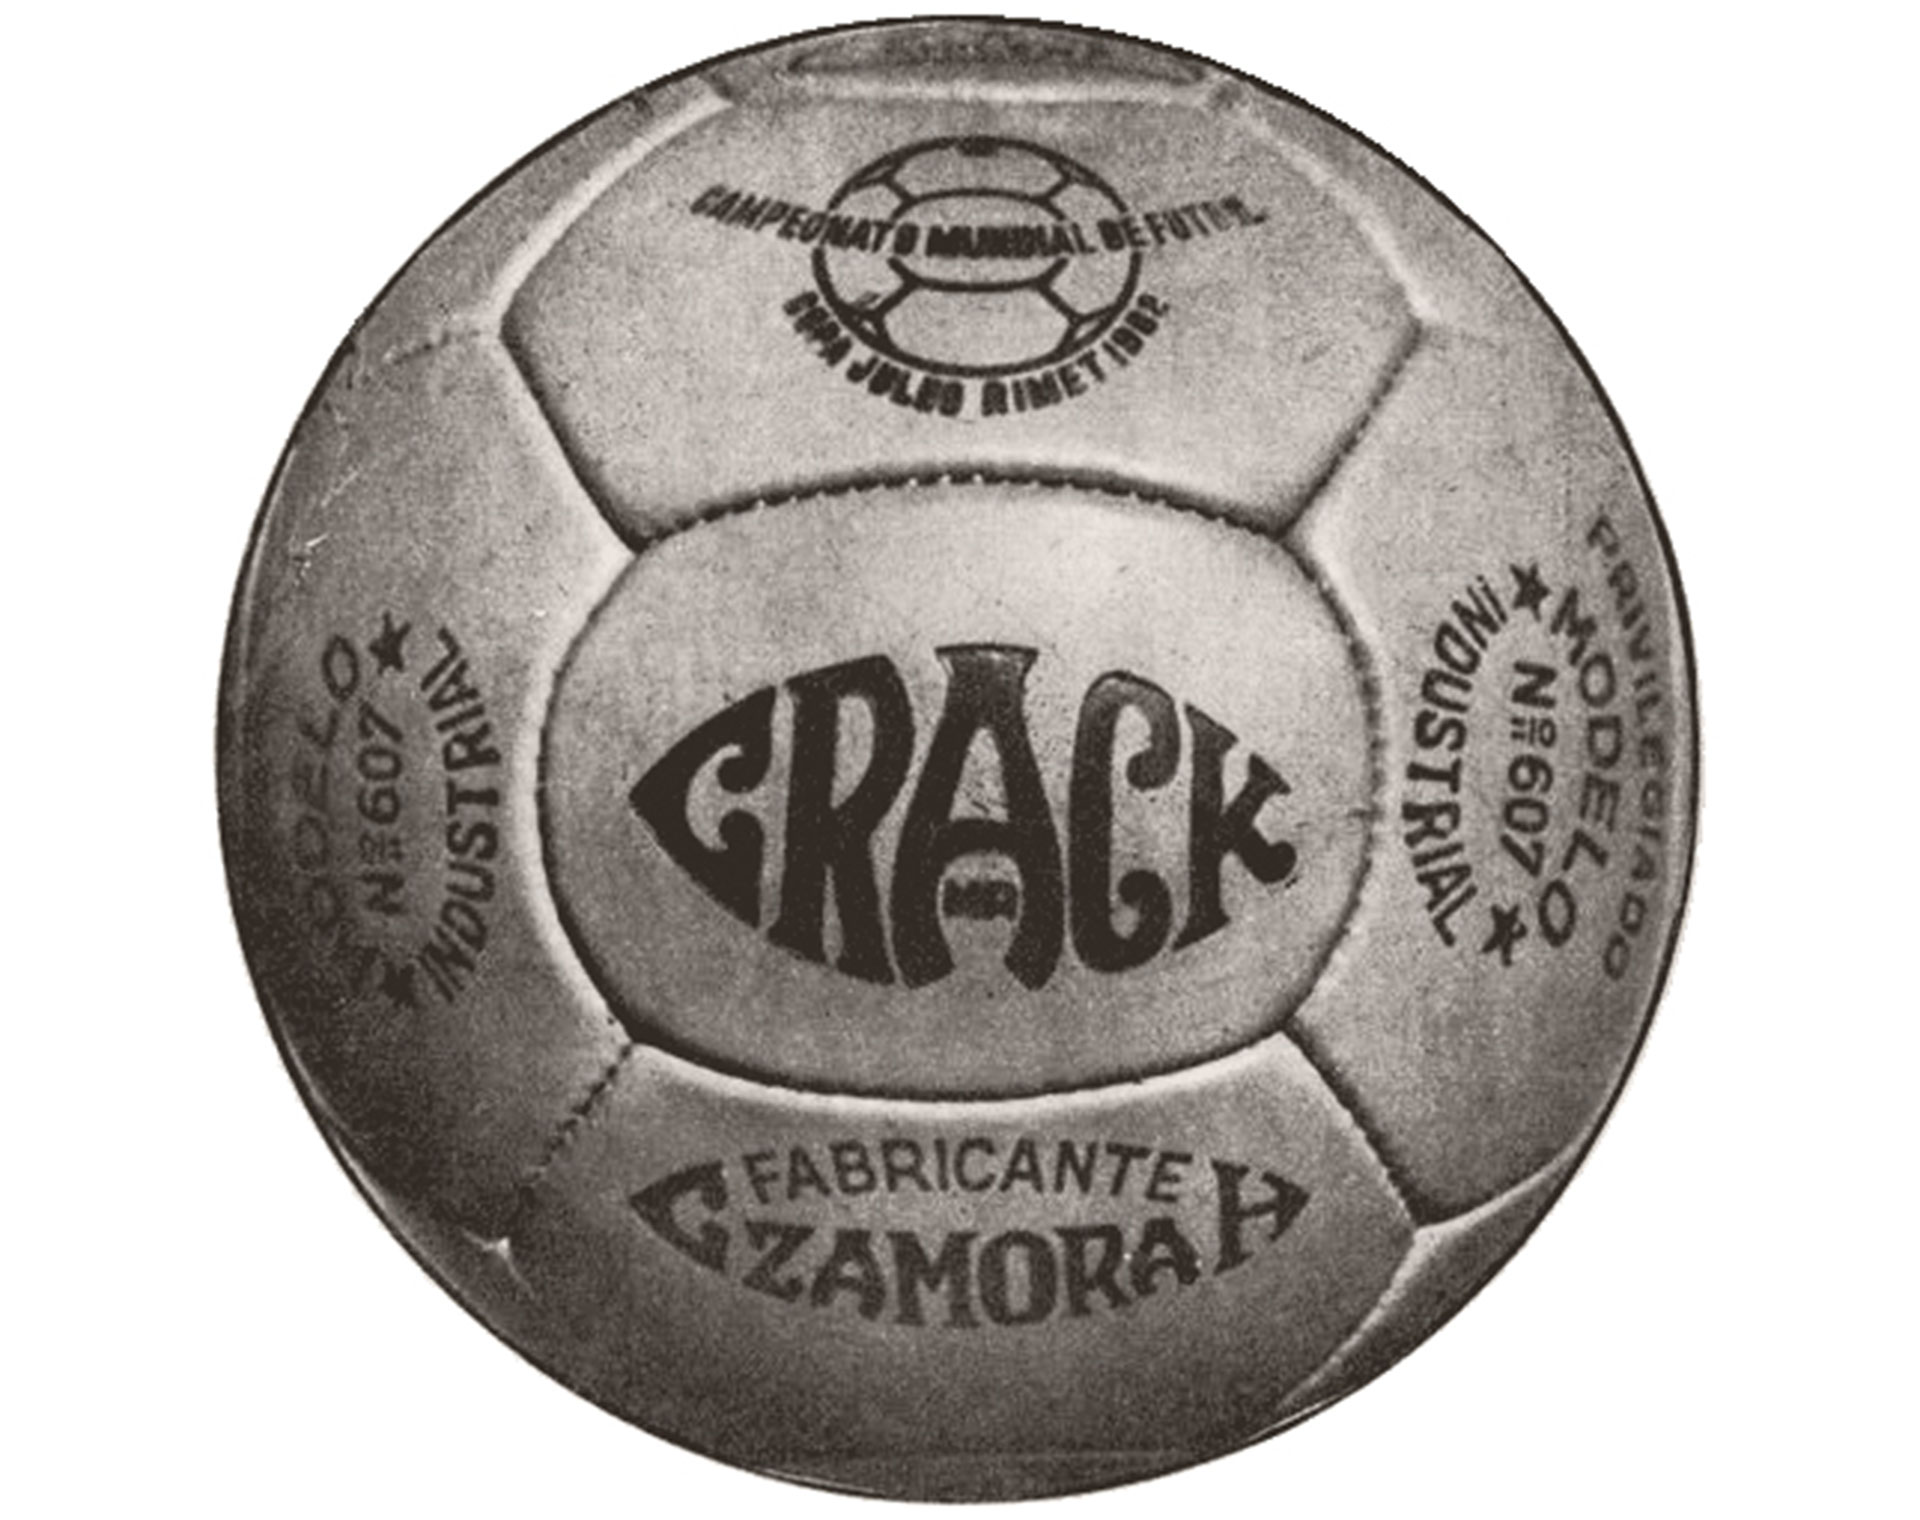 Pelota de Chile 1962 "Crack"